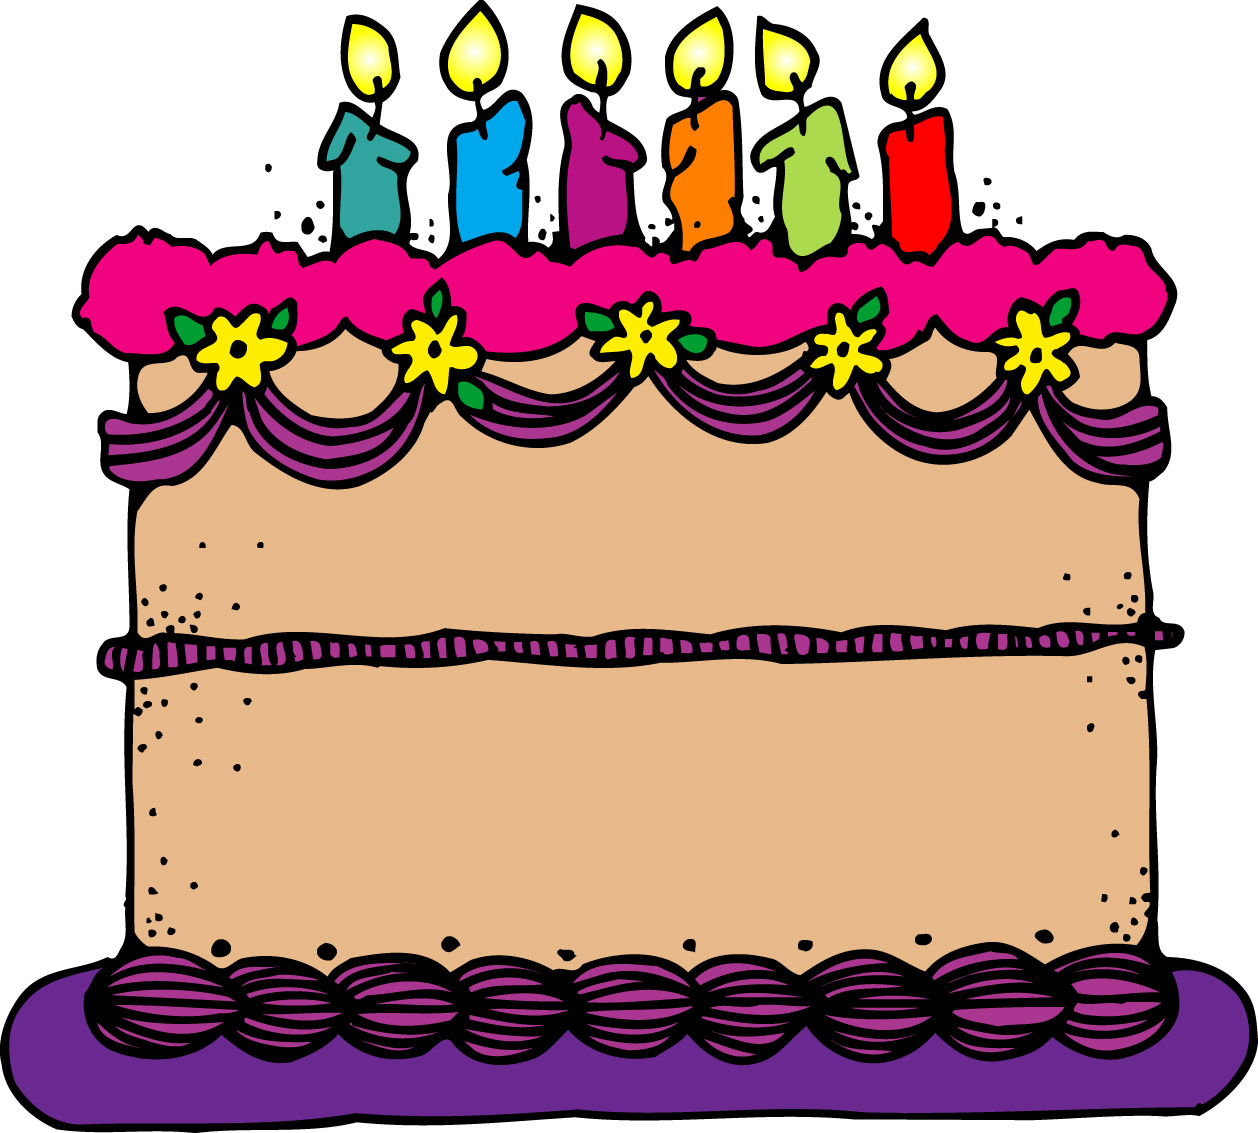 Happy Birthday Cake Clip Art - Tumundografico